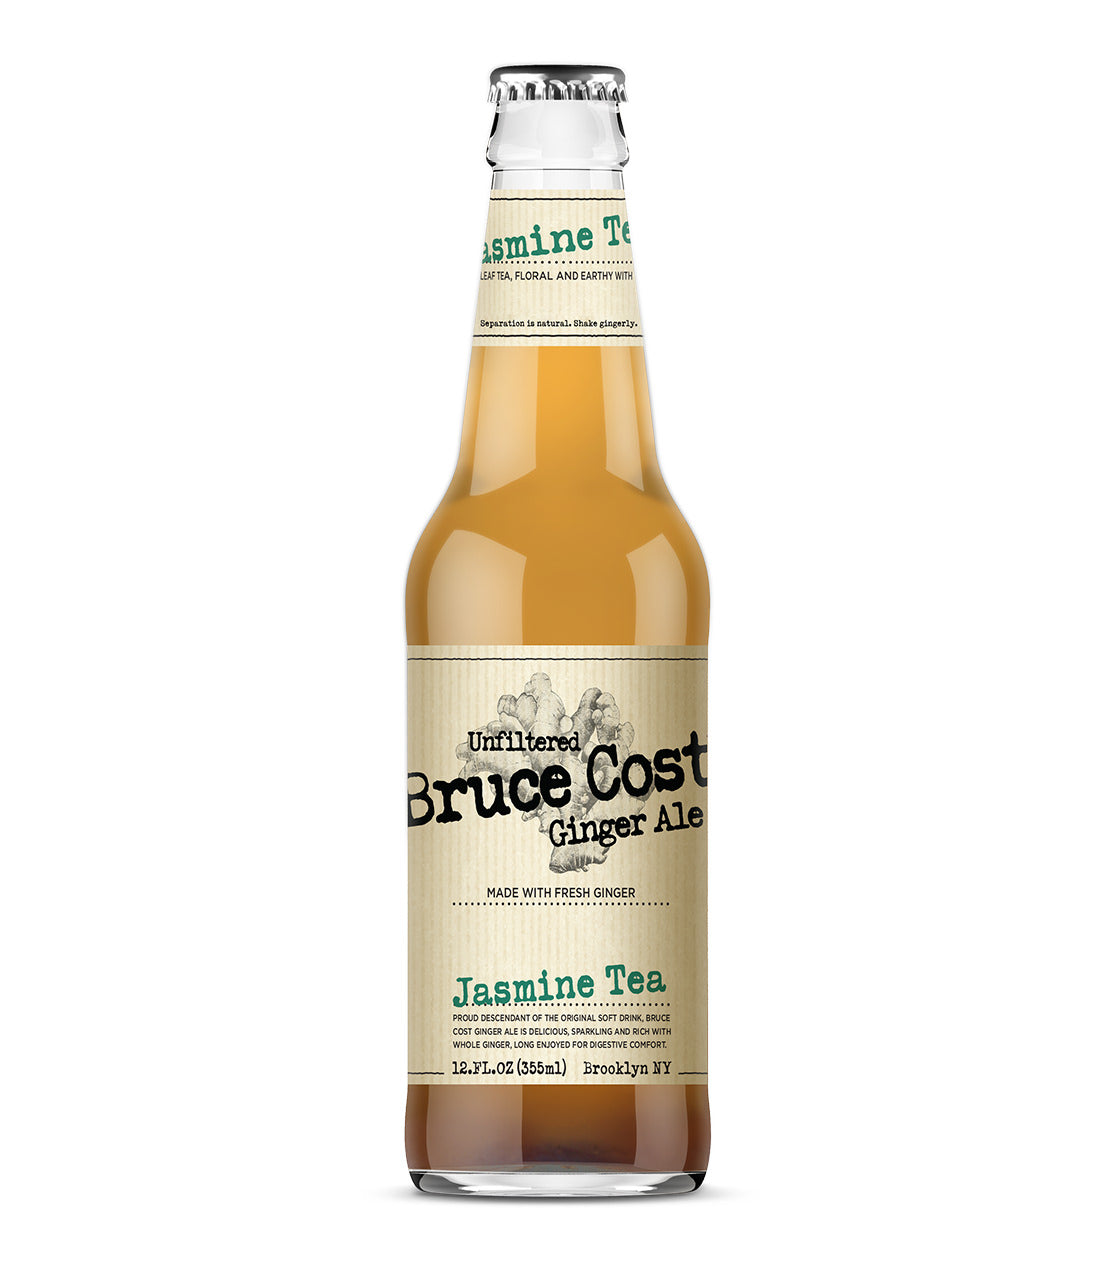 Bruce Cost Ginger Ale Jasmine Green Tea - 12 oz. Bottle Case of 12 Bottles - Harney & Sons Fine Teas